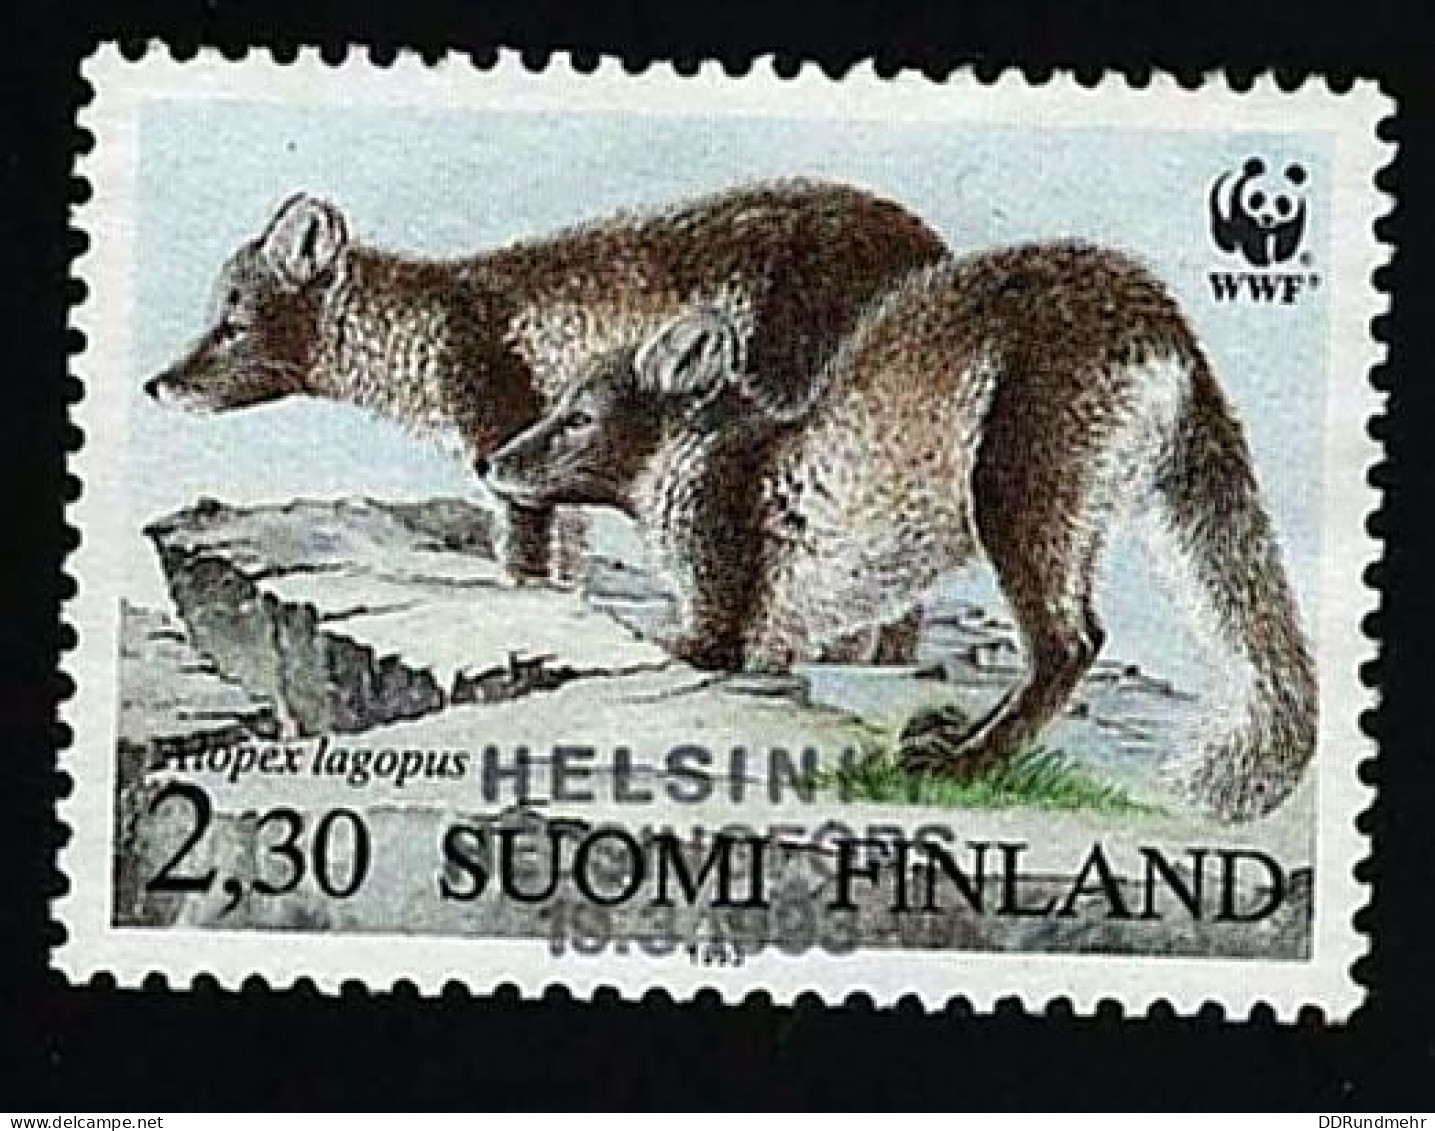 1993 Arctic Fox   Michel FI 1205 Stamp Number FI 907d Yvert Et Tellier FI 1169   First Day Stamp Used - Gebruikt